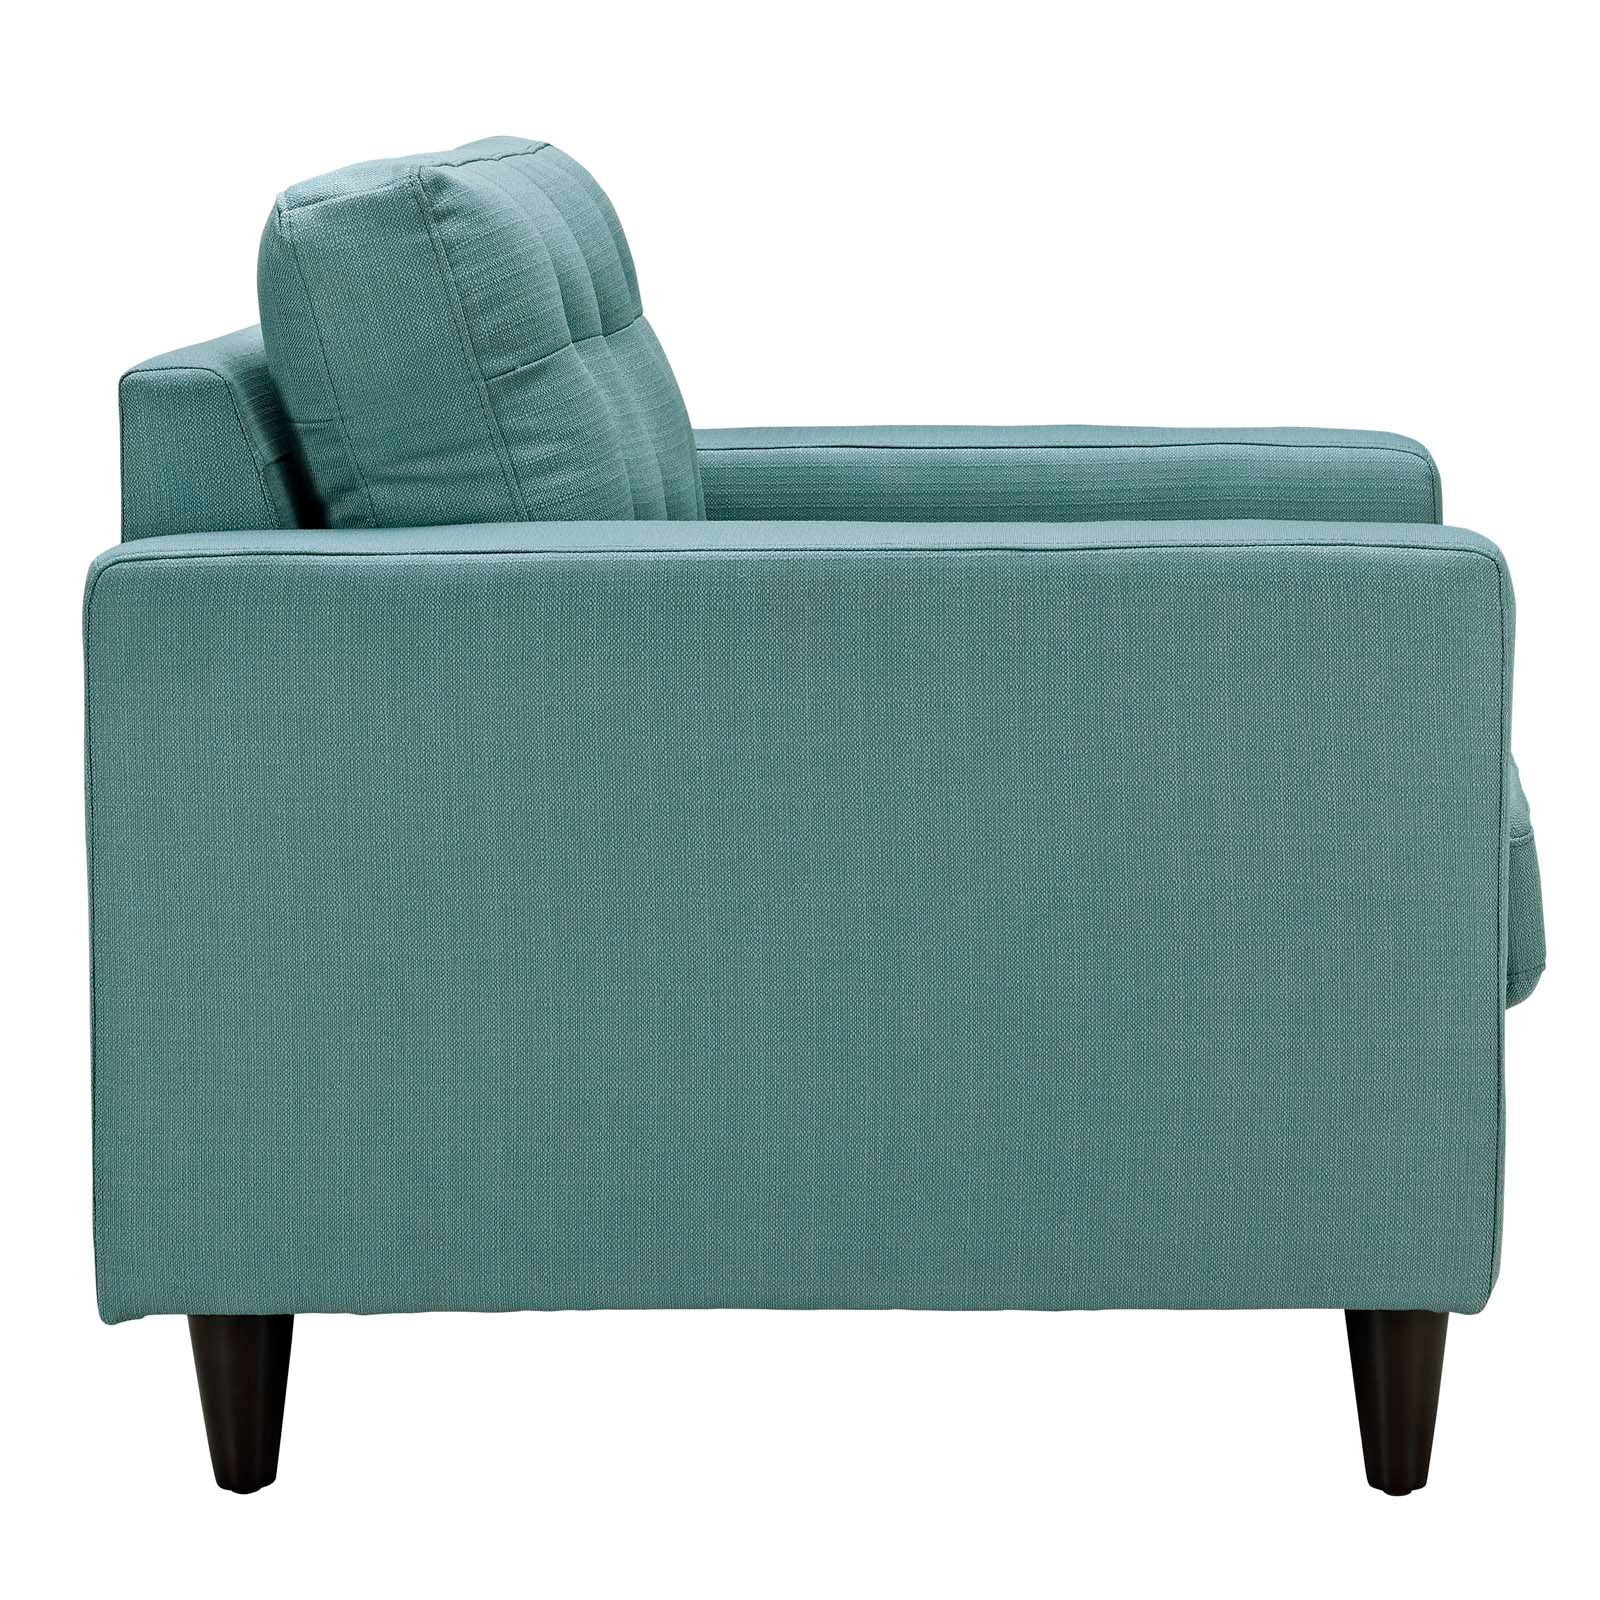 Modway Living Room Sets - Empress Sofa, Loveseat And Armchair Set Of 3 Laguna